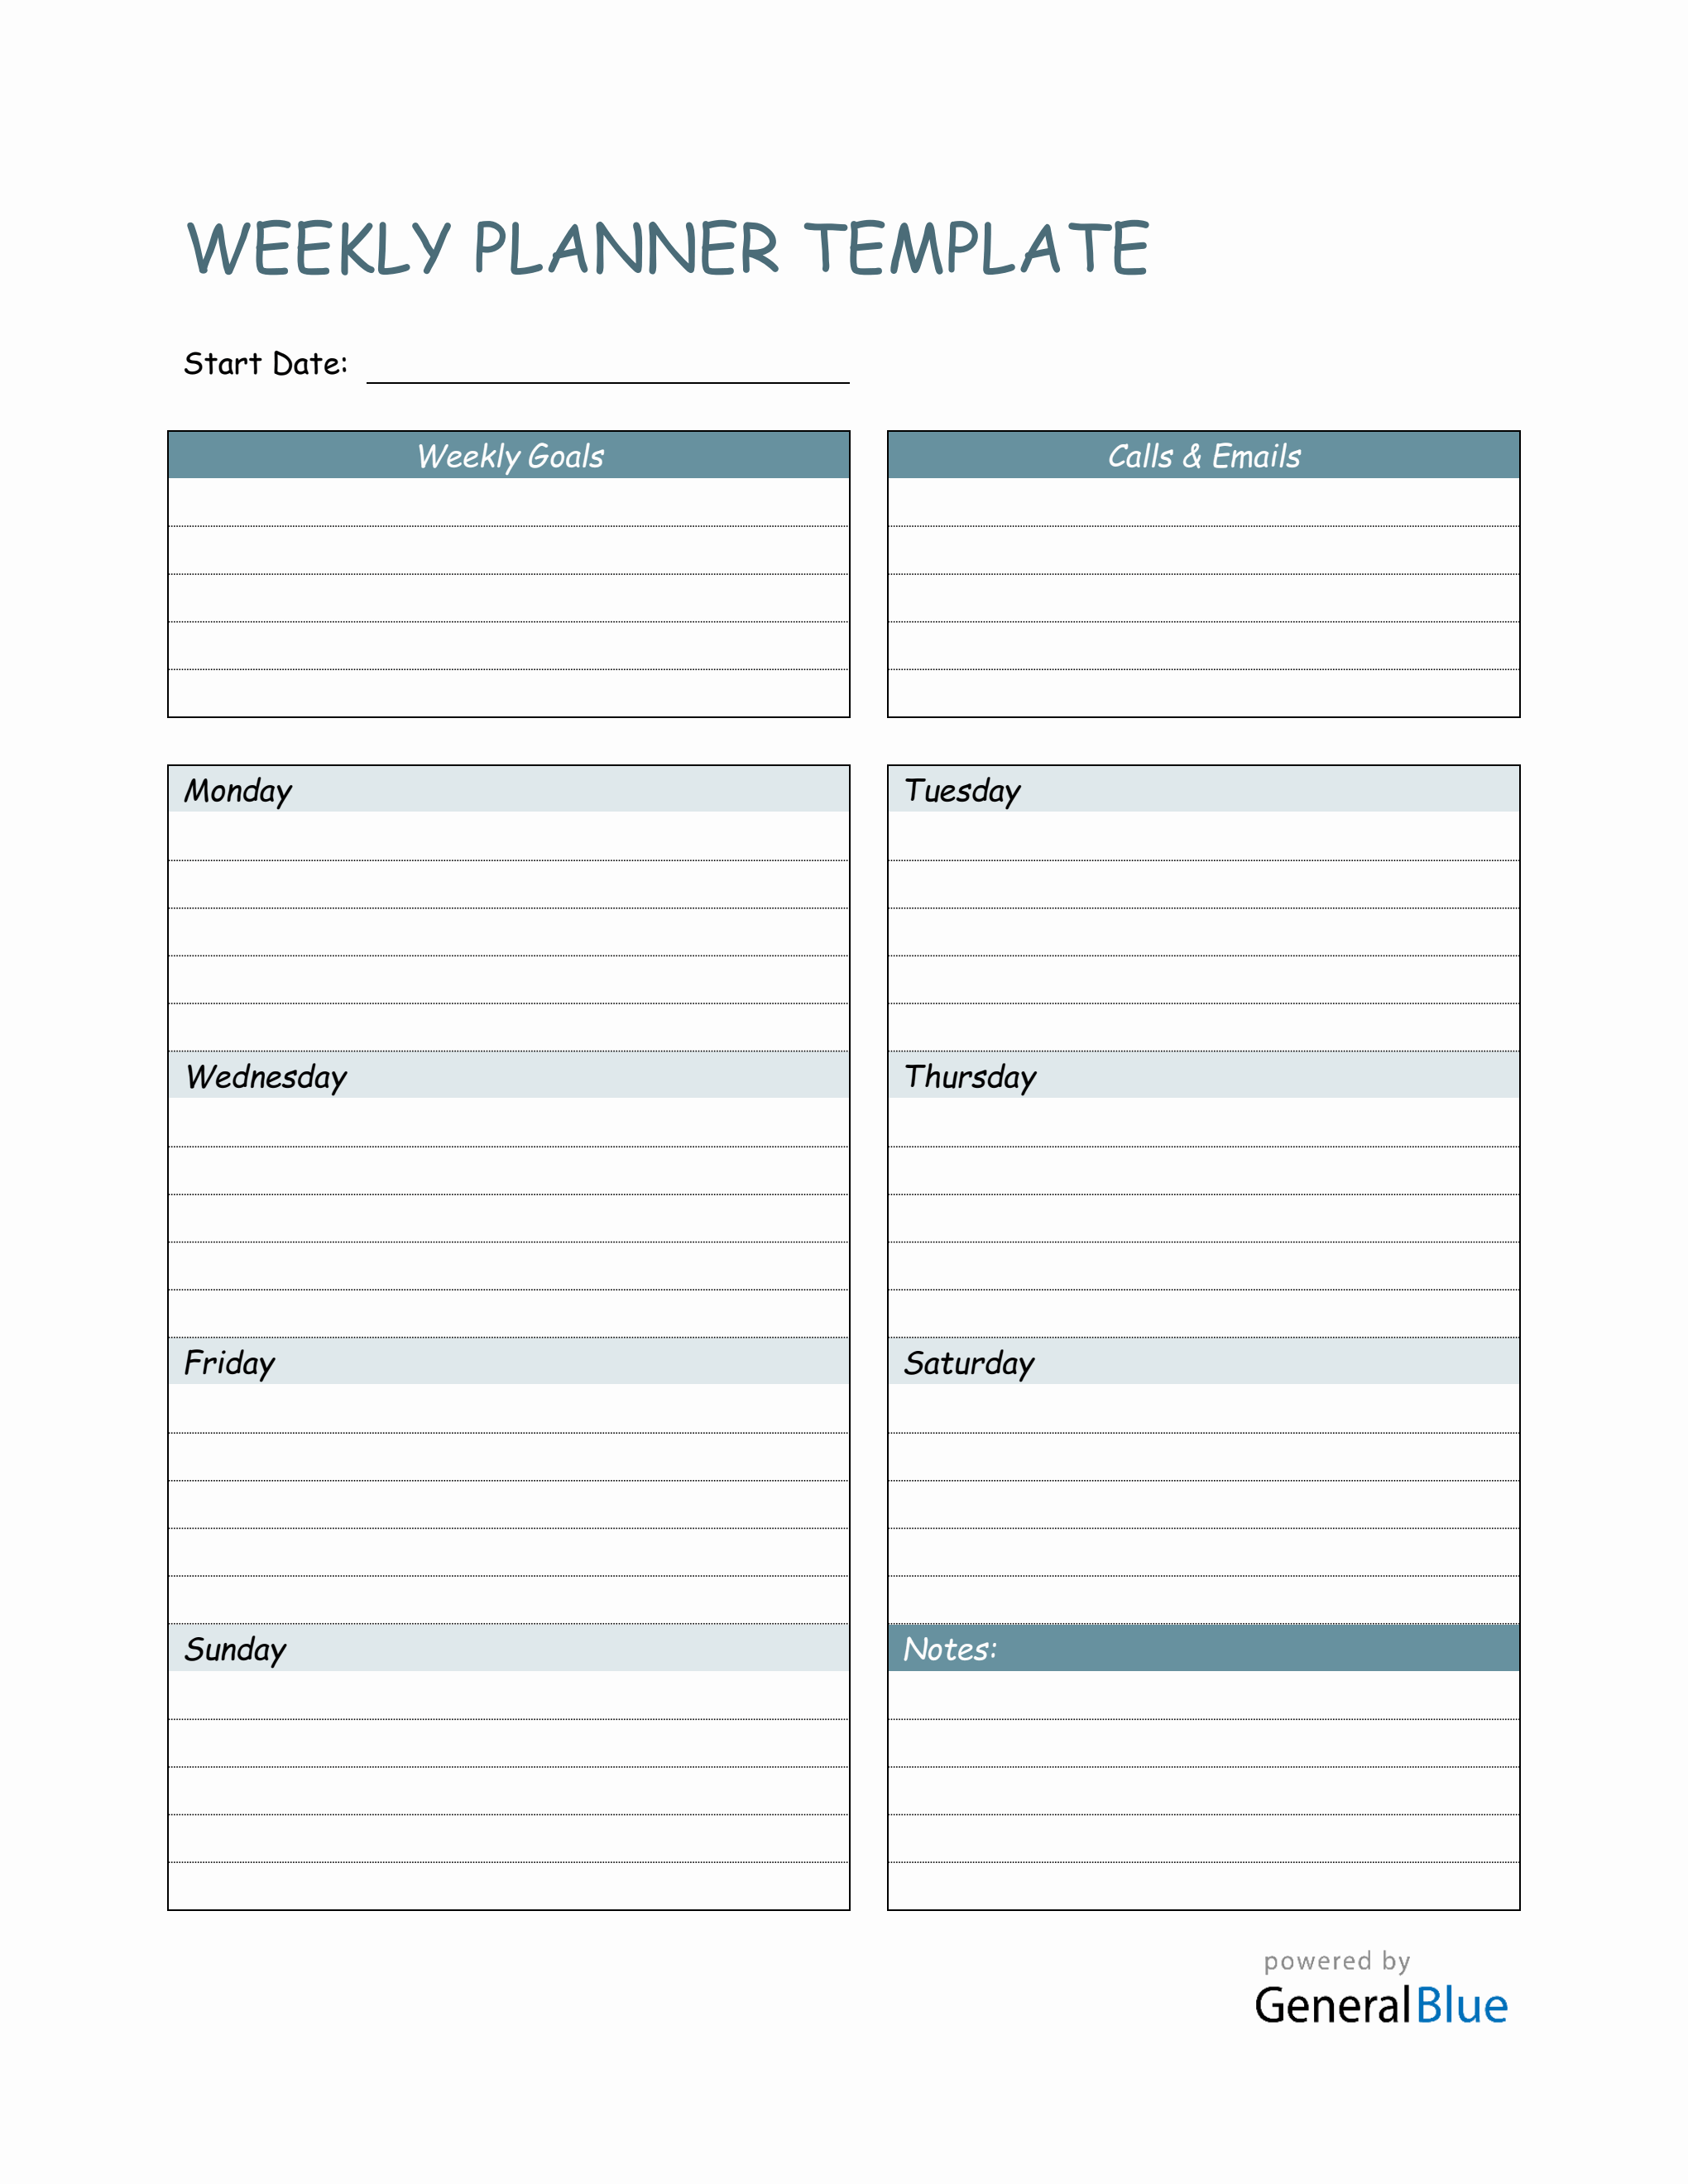 weekly-planner-template-in-word